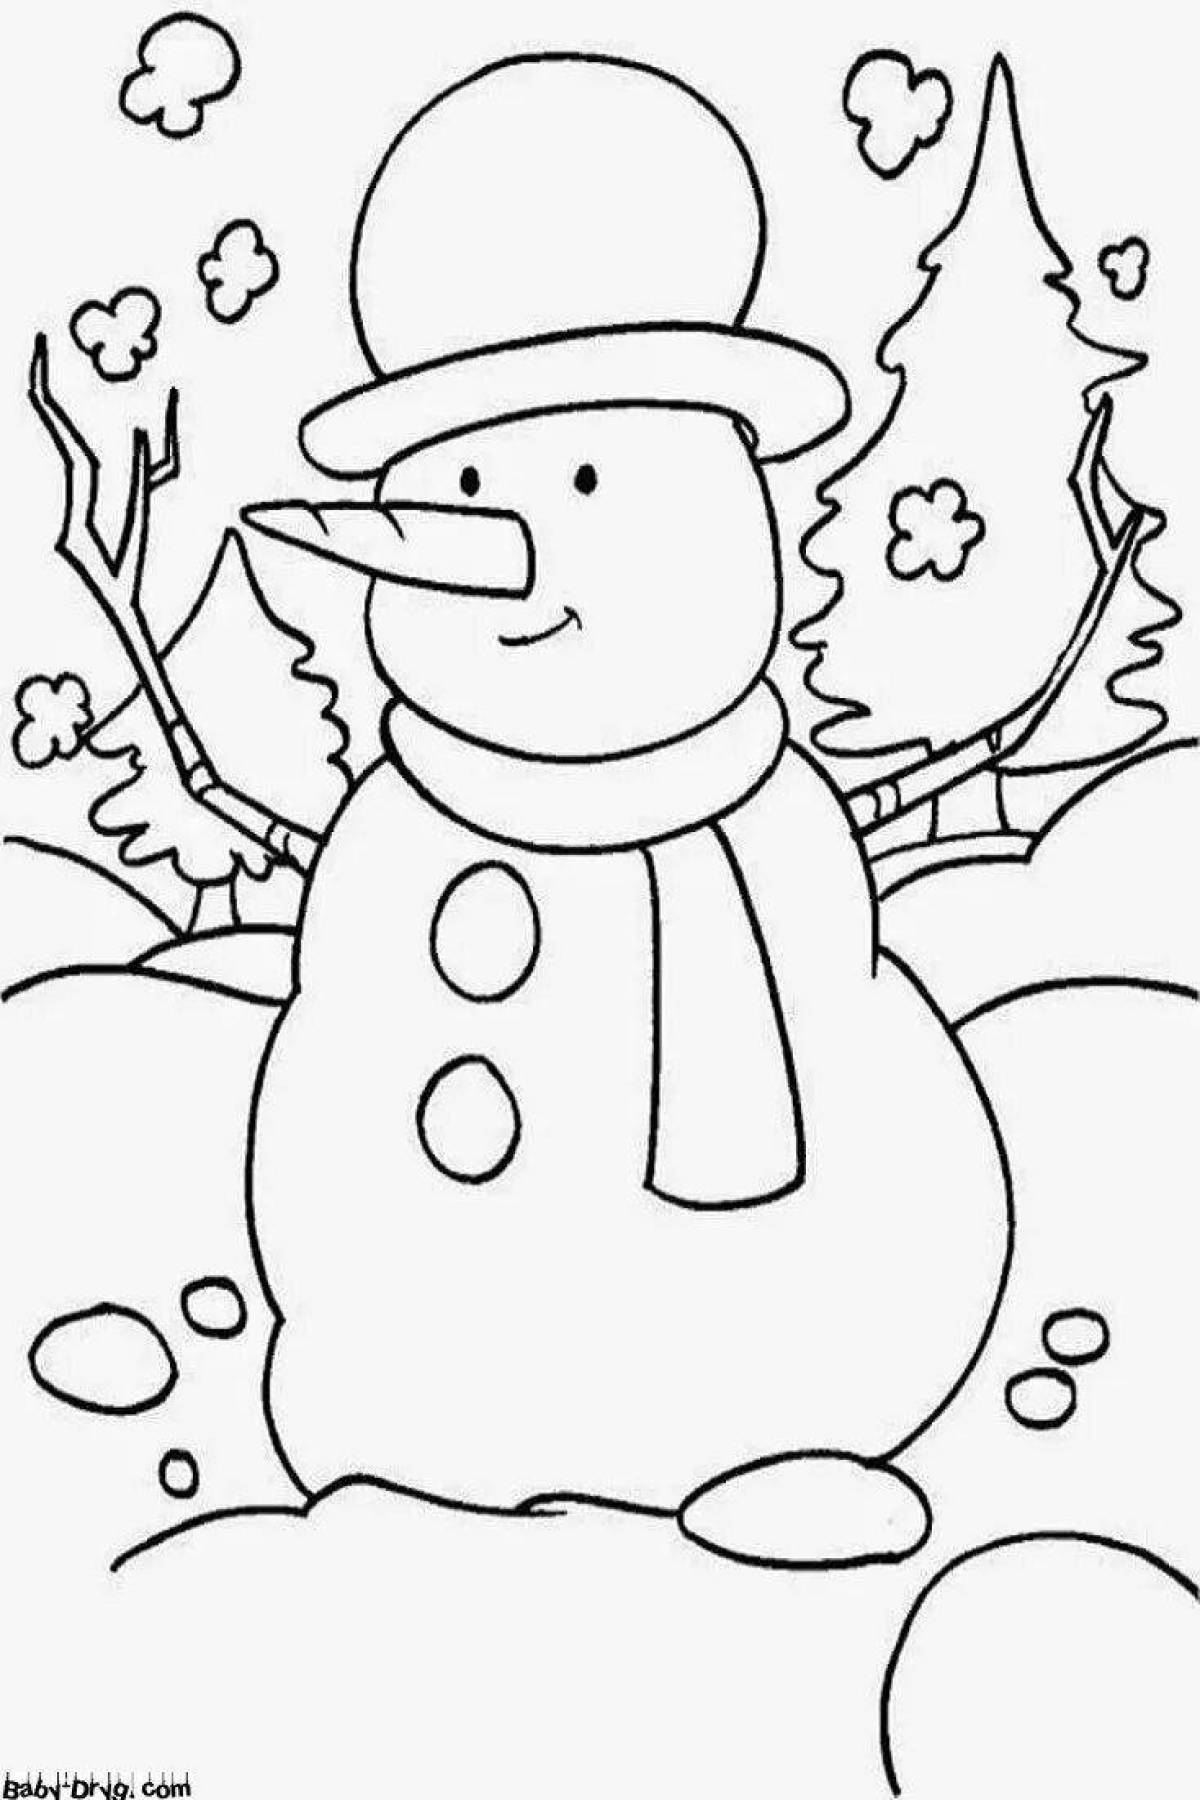 Snowman #5